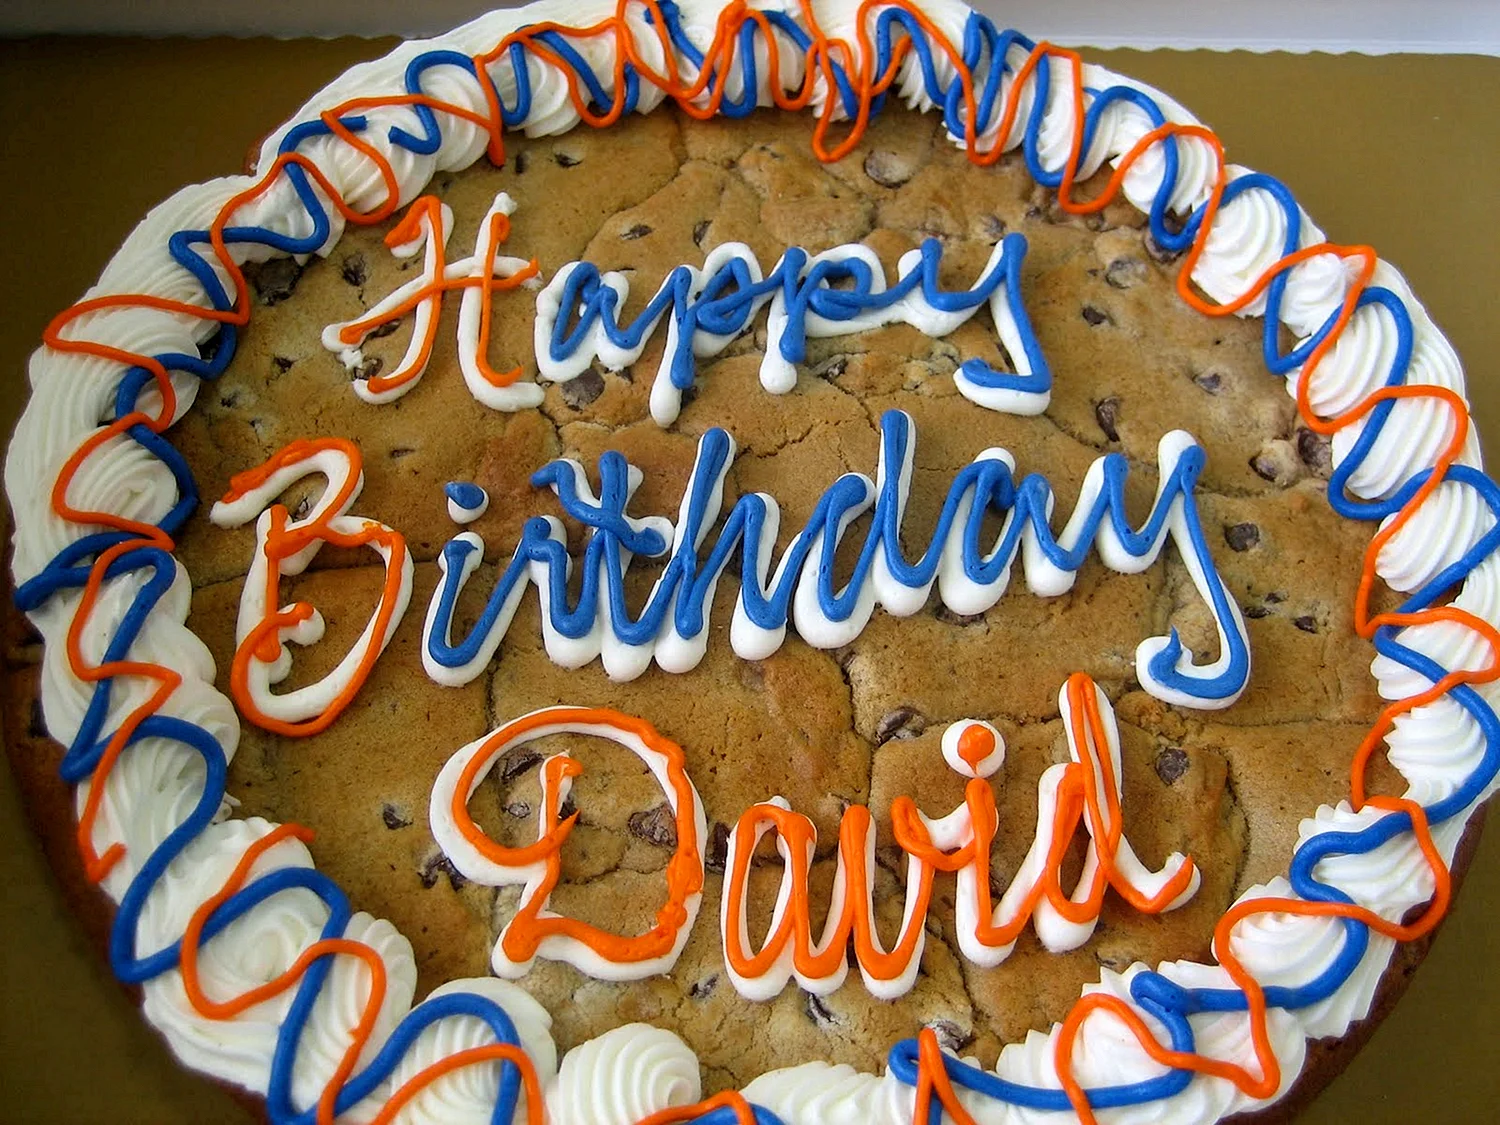 Happy Birthday Давид